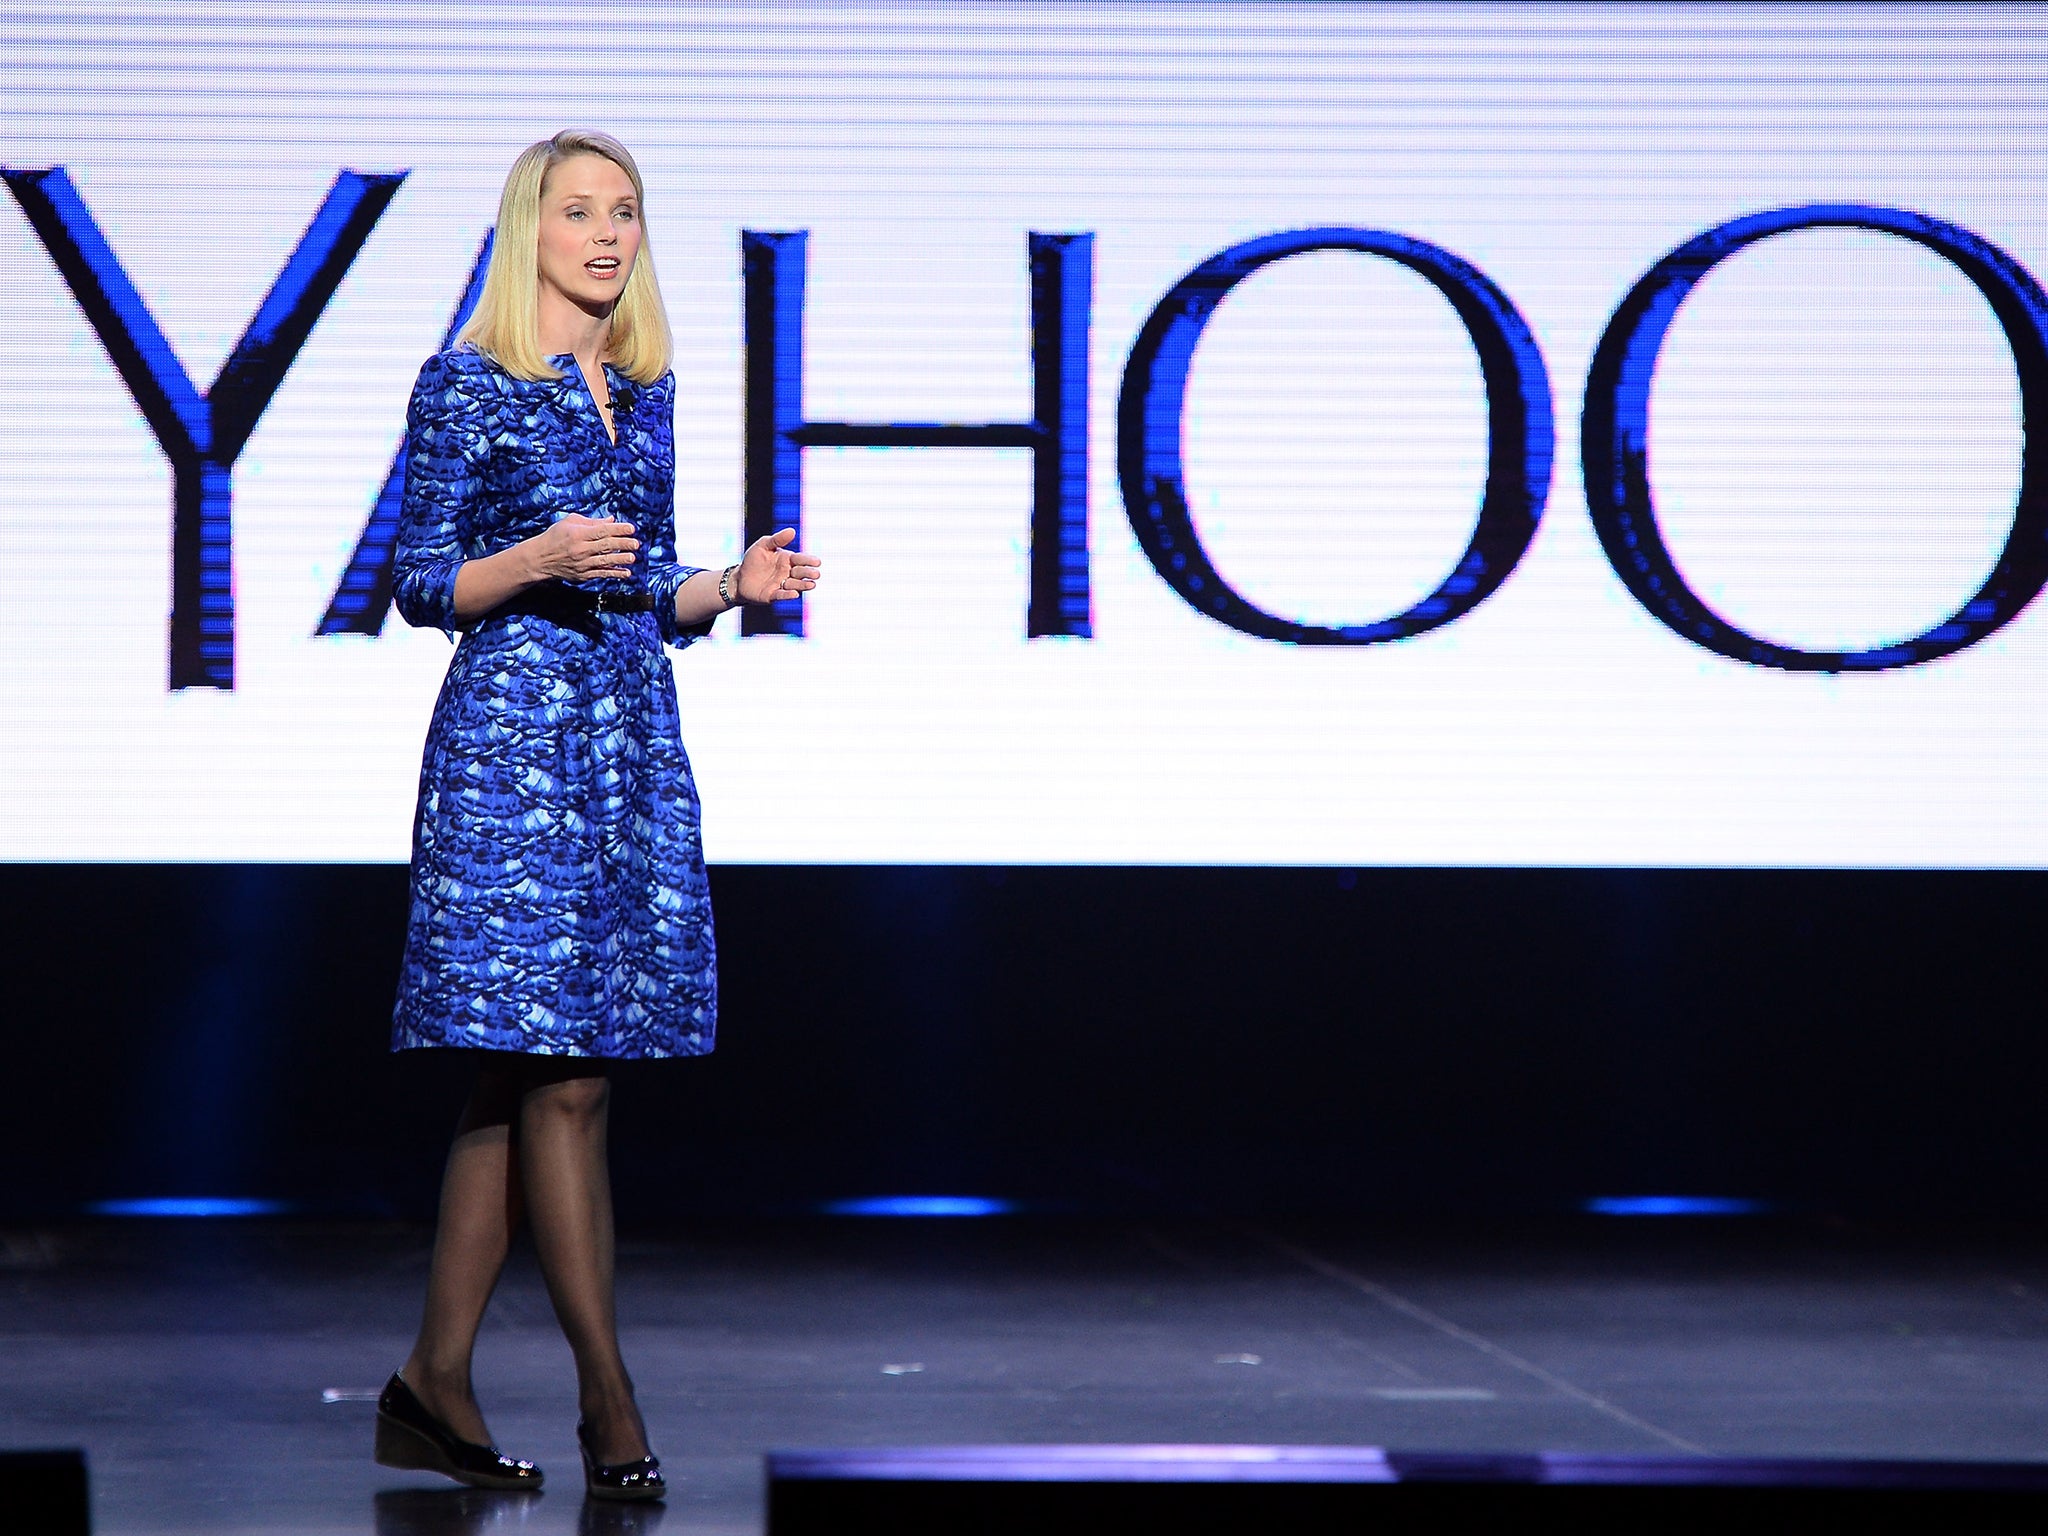 Marissa Mayer is the chief executive of the tech company Yahoo!